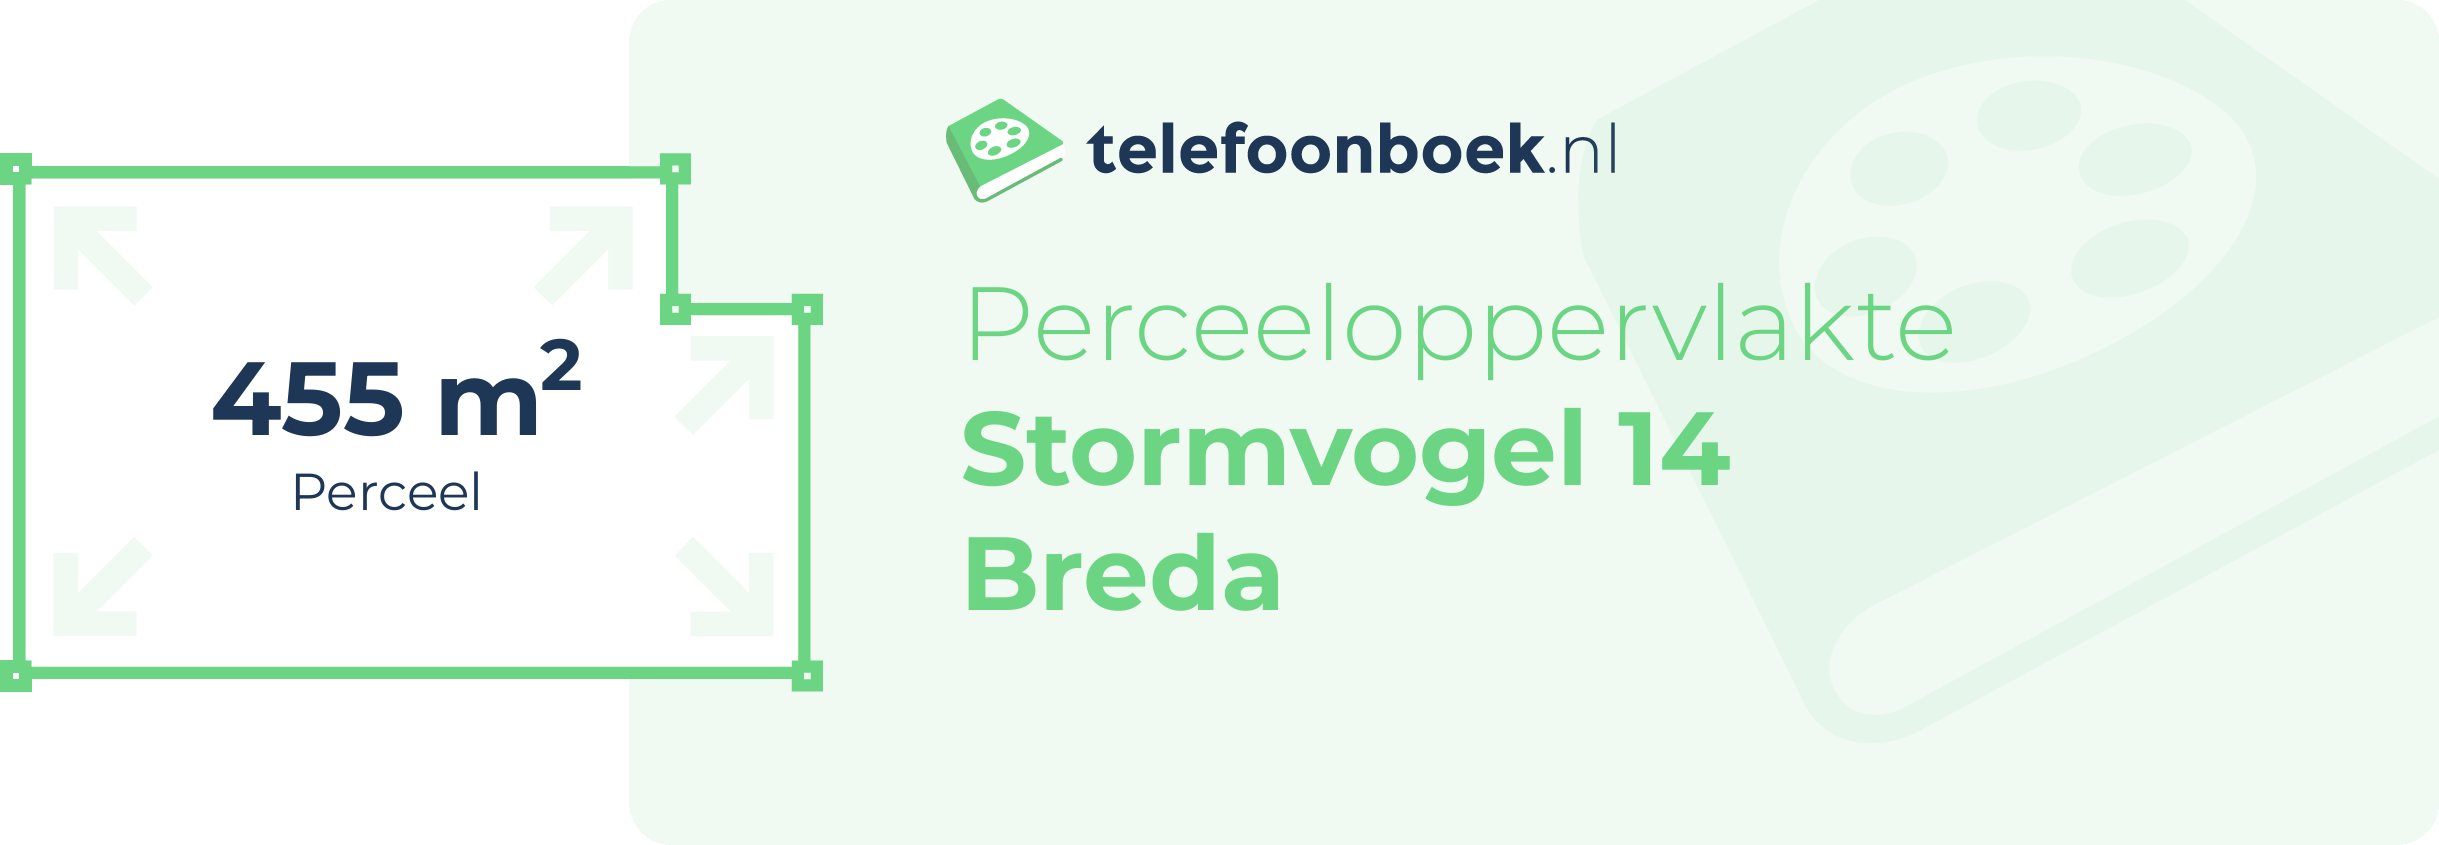 Perceeloppervlakte Stormvogel 14 Breda